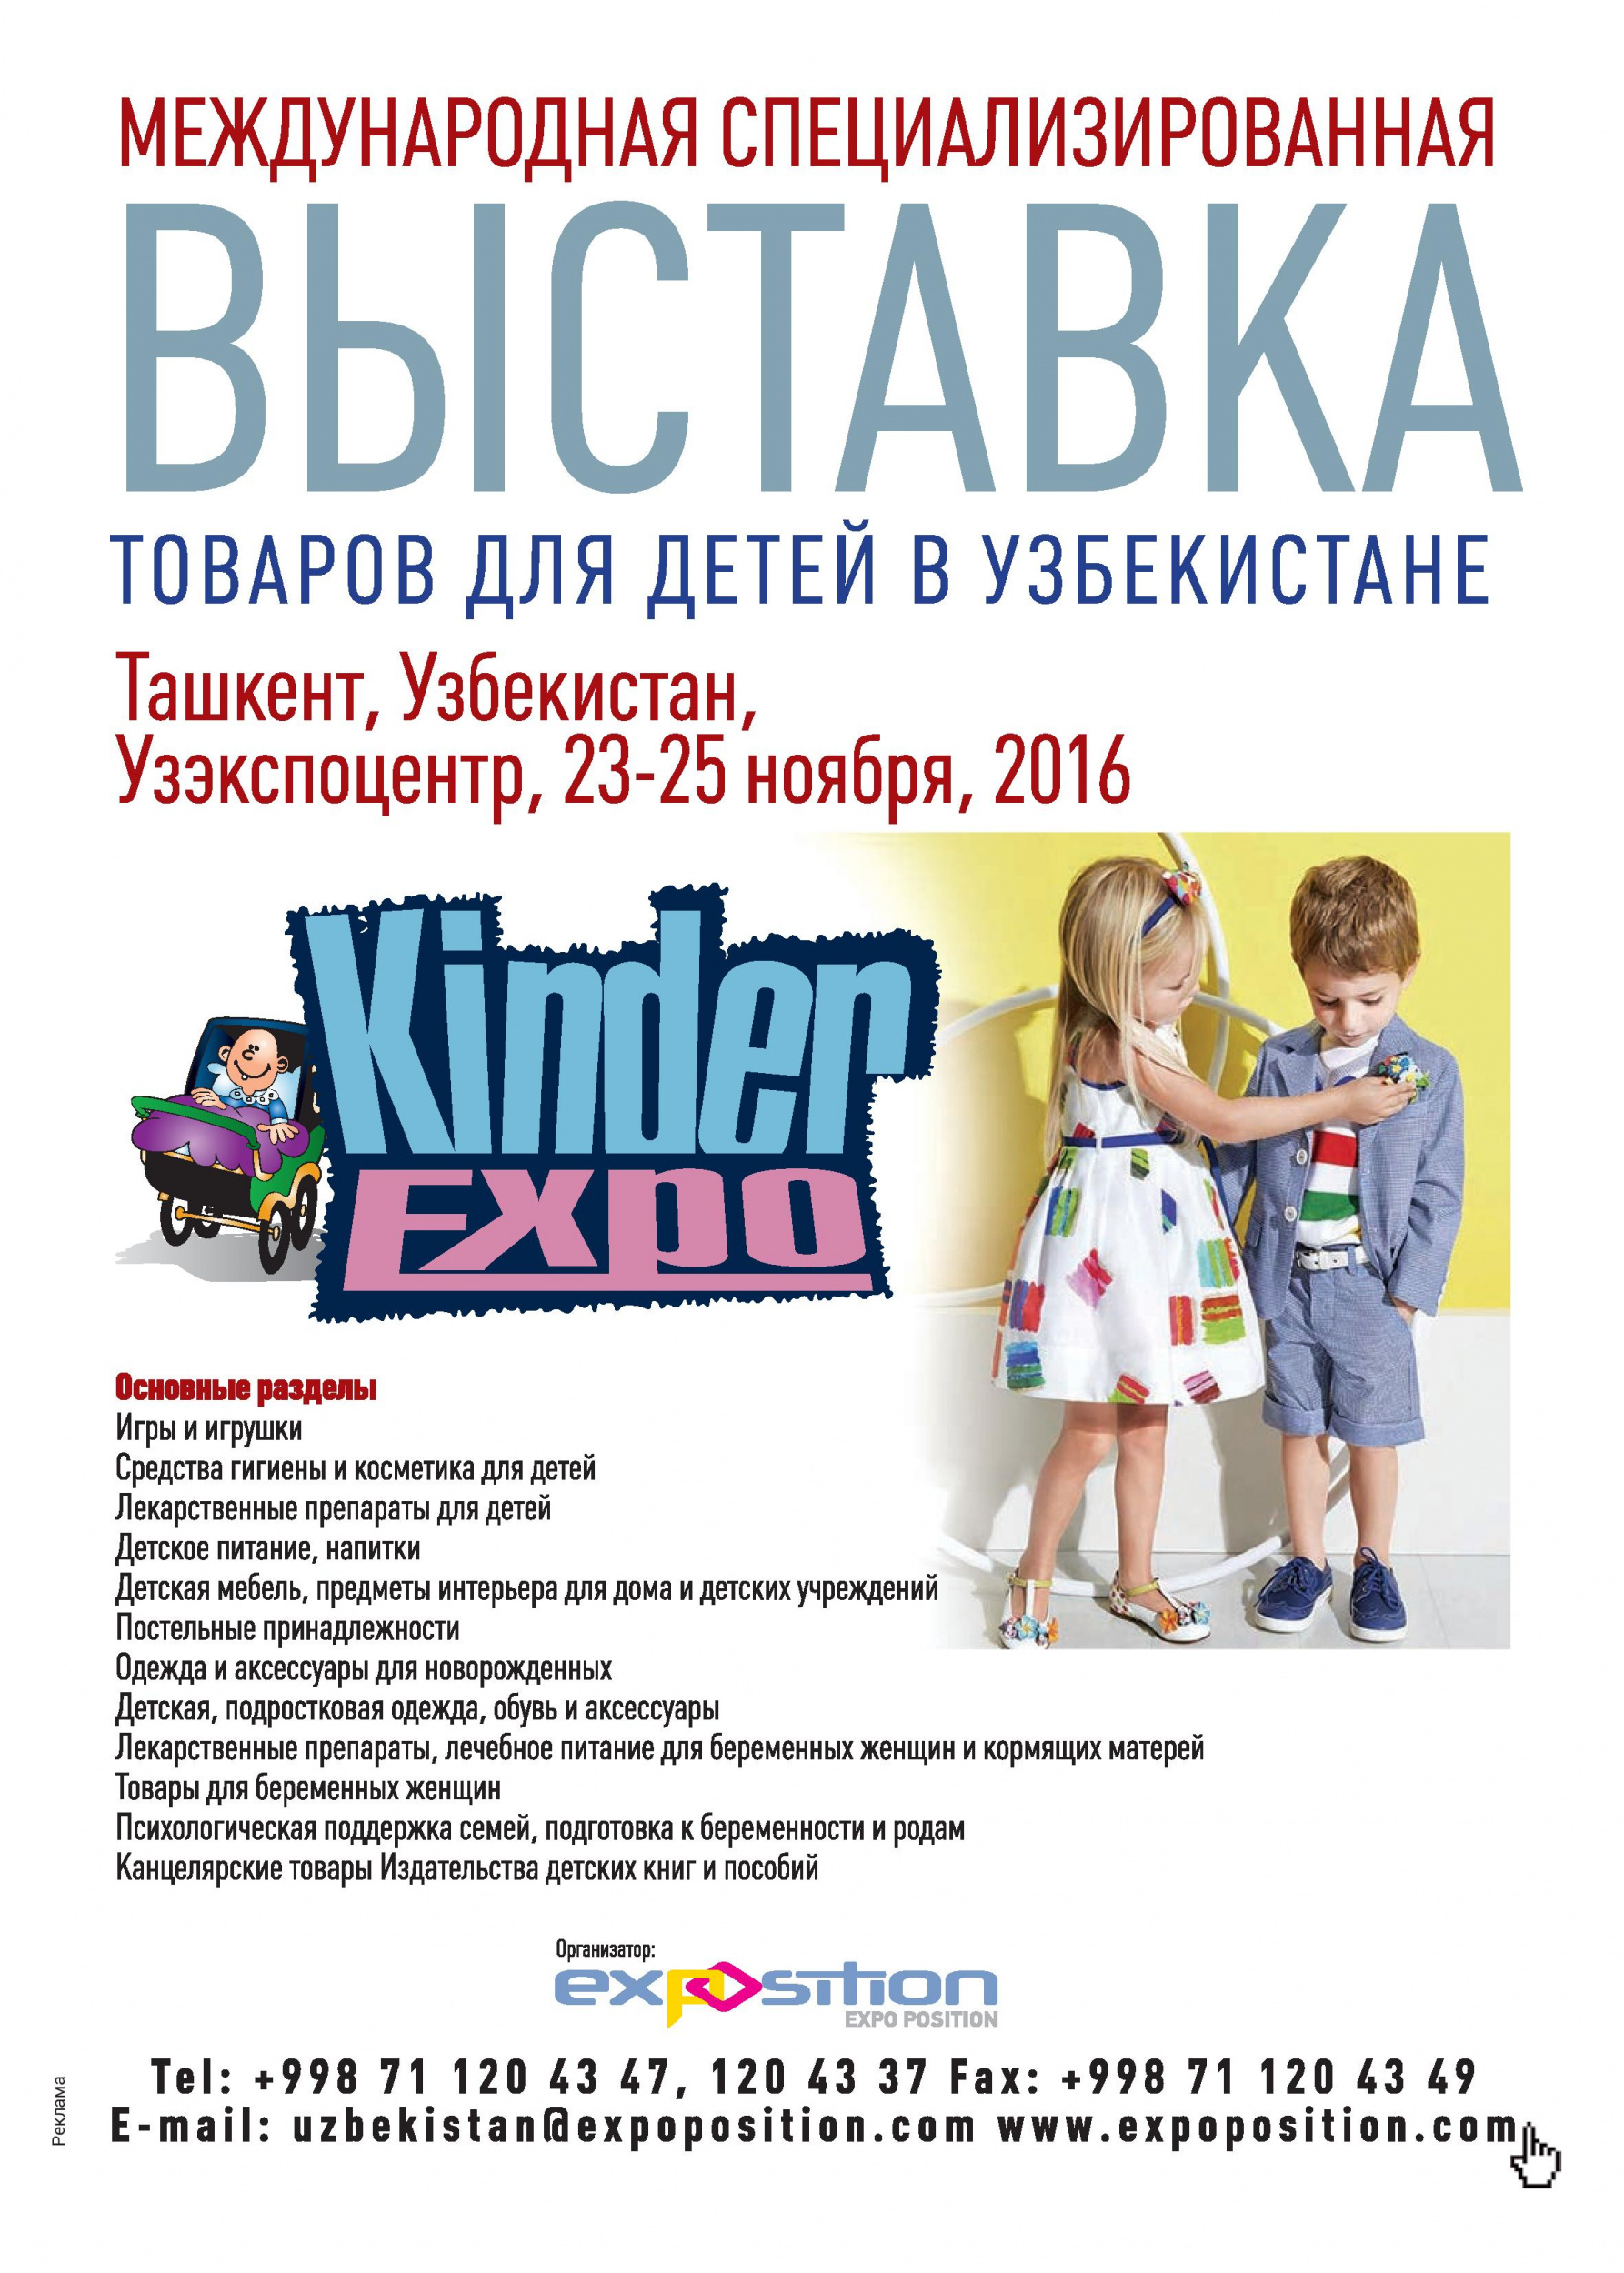 Kinder Expo Uzbekistan 2016